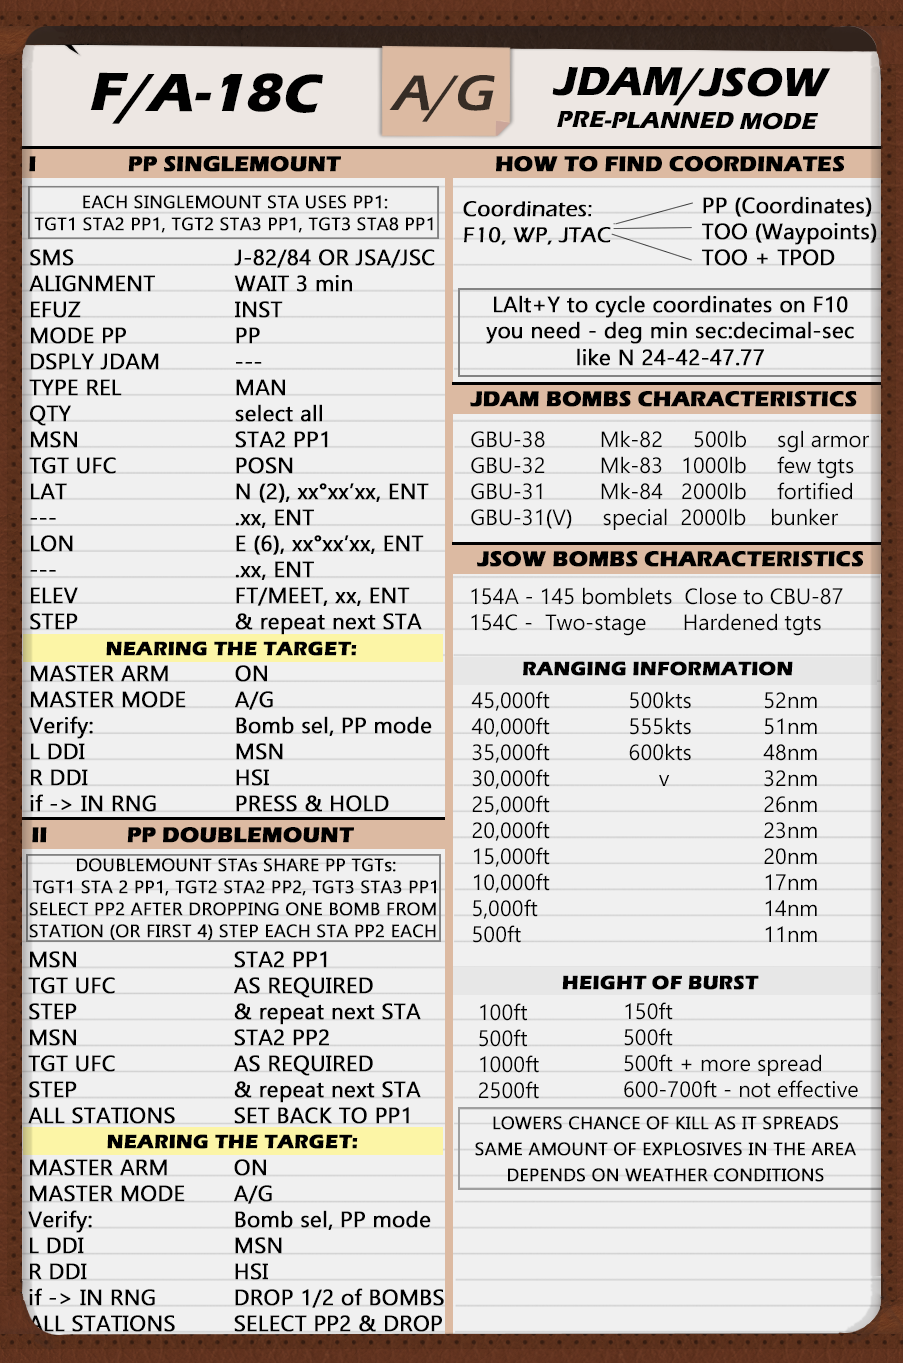 F/A-18C BatLunette's JDAM/JSOW Checklist DAY/NIGHT Versions